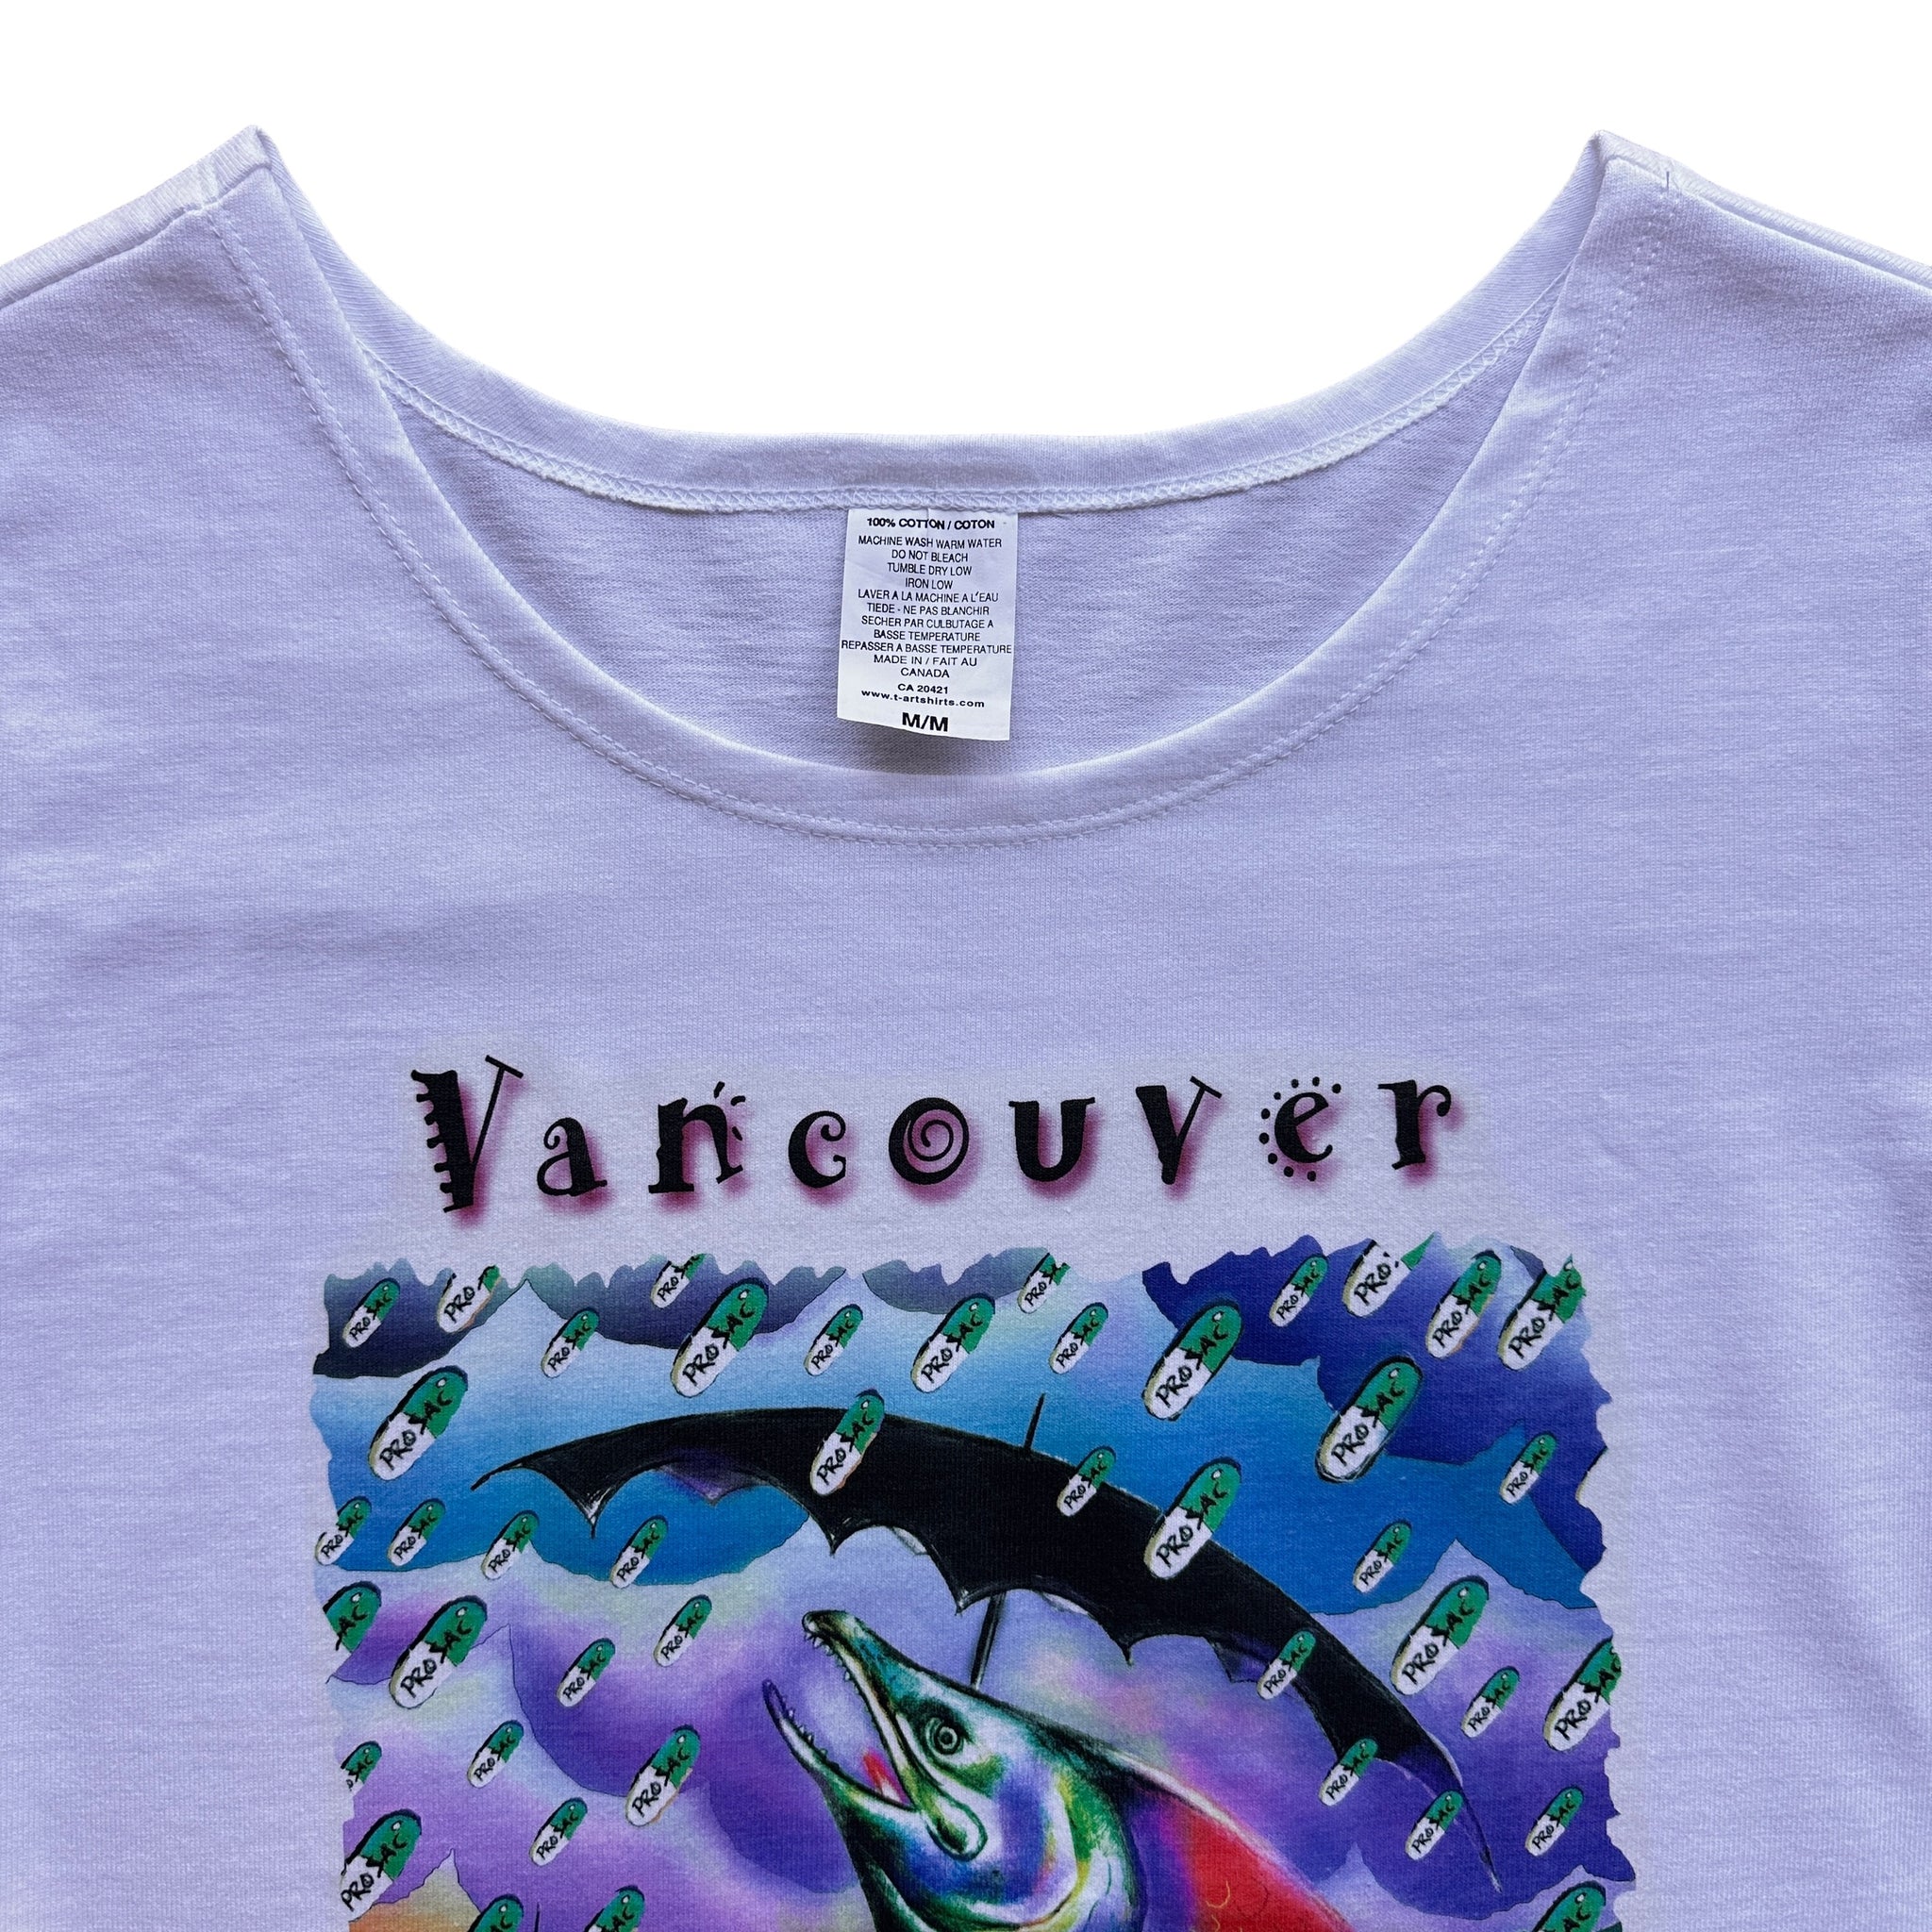 90s Vancouver salmon prozac tee women’s medium